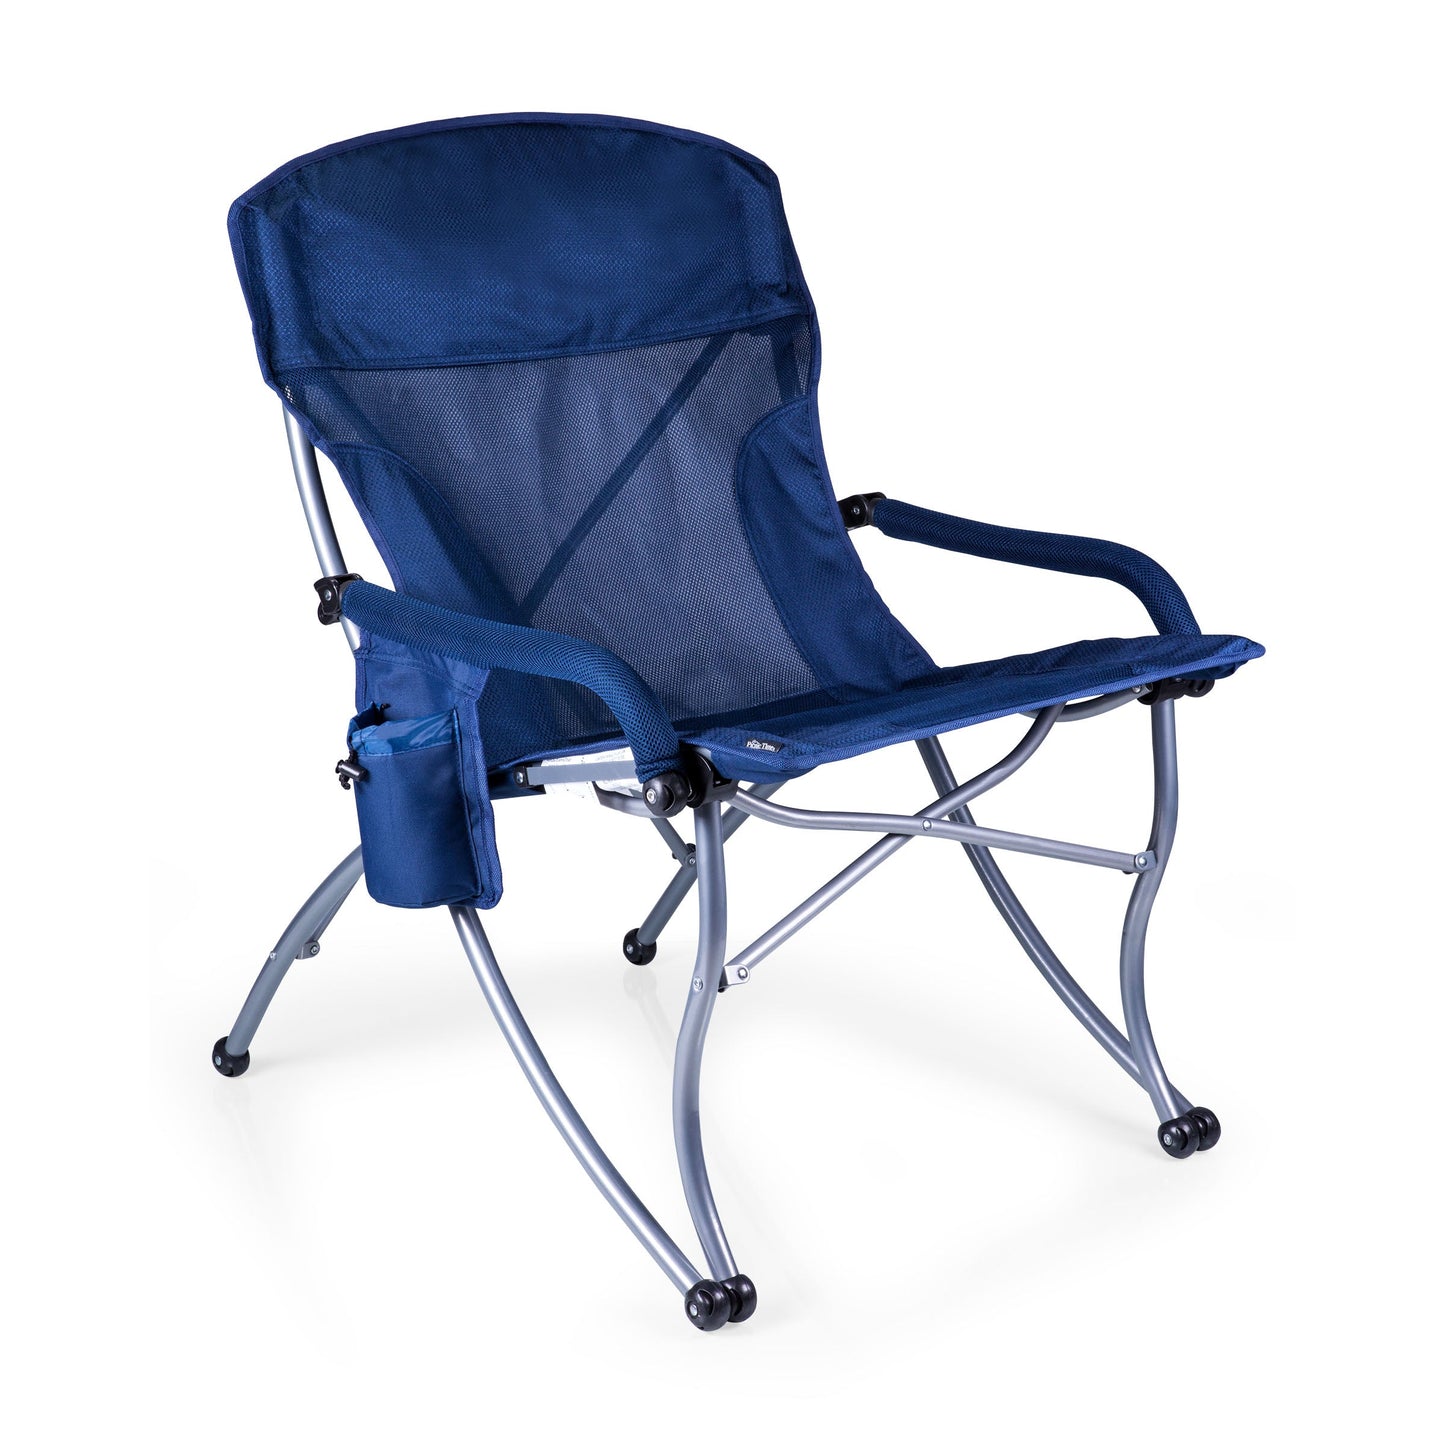 PT-XL Heavy Duty Camping Chair